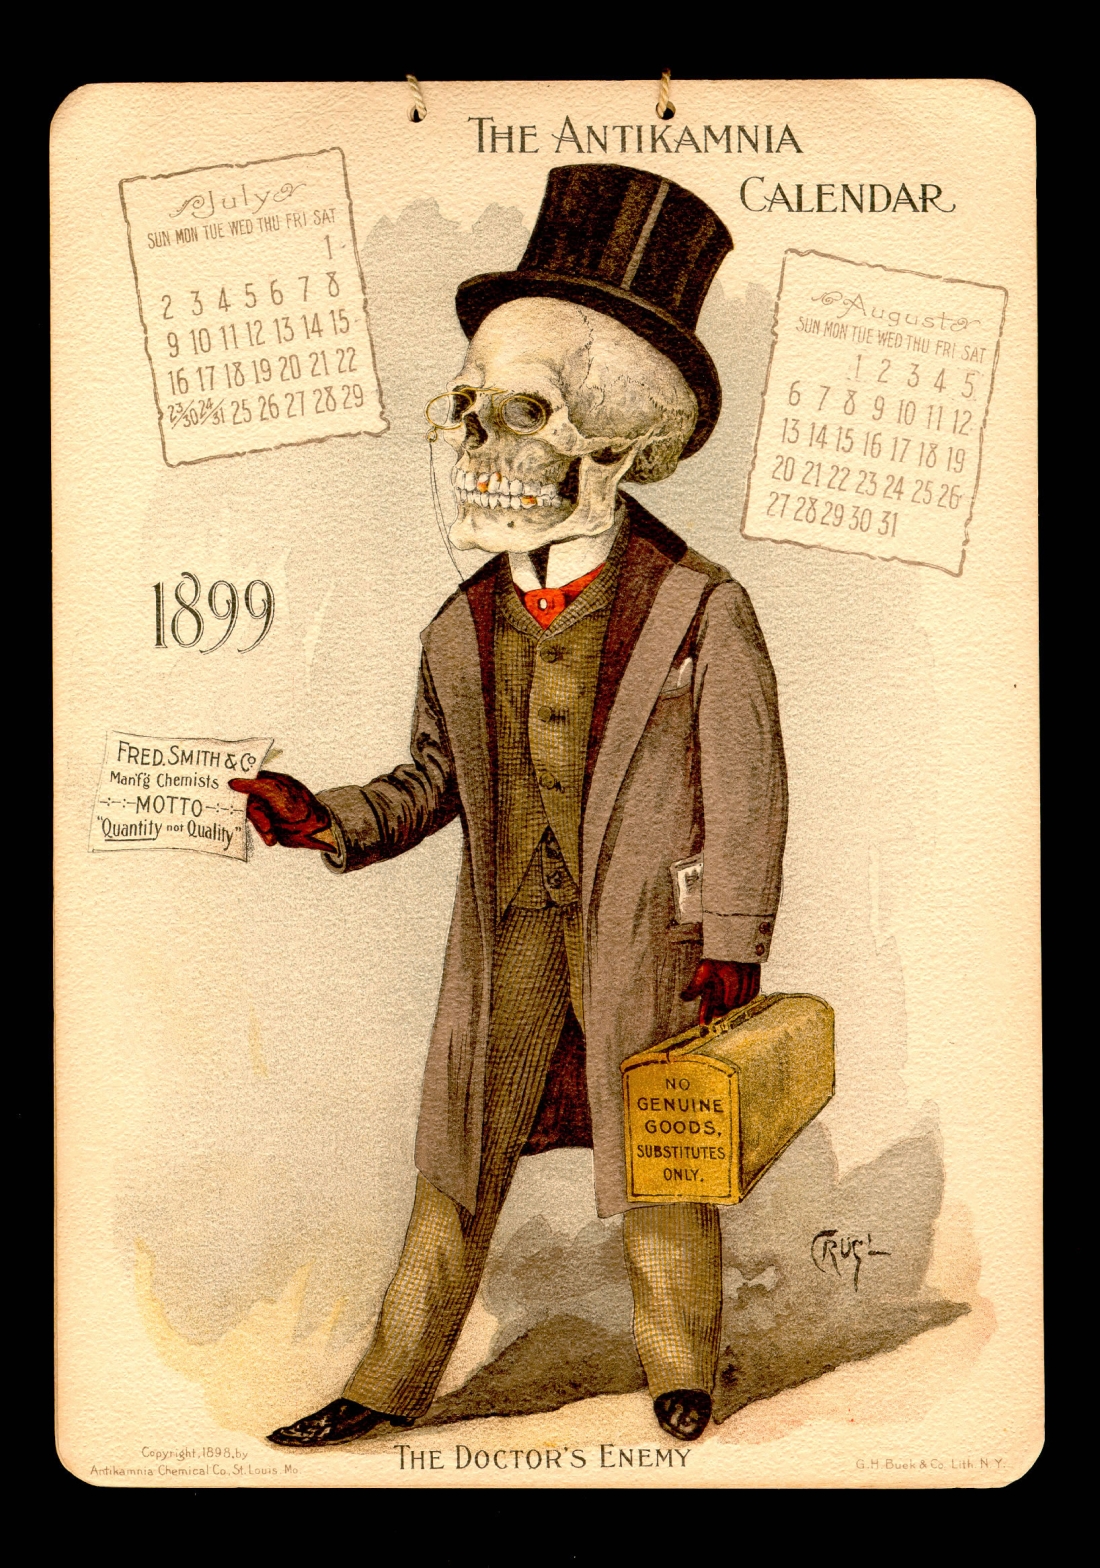 1899 antikamnia medical calendar